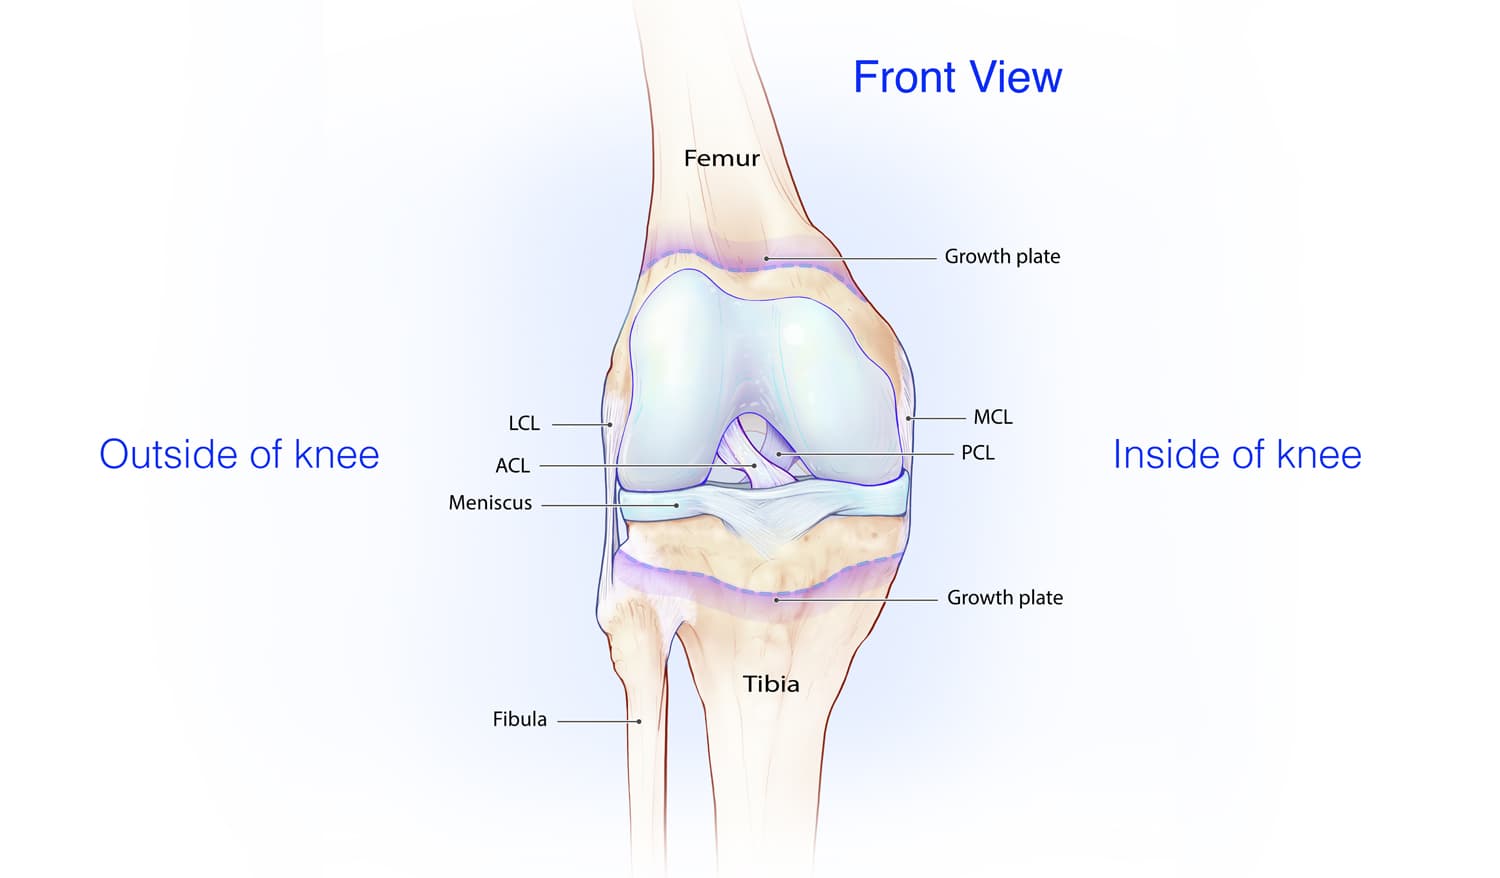 Fig. 1: Anatomy of the knee